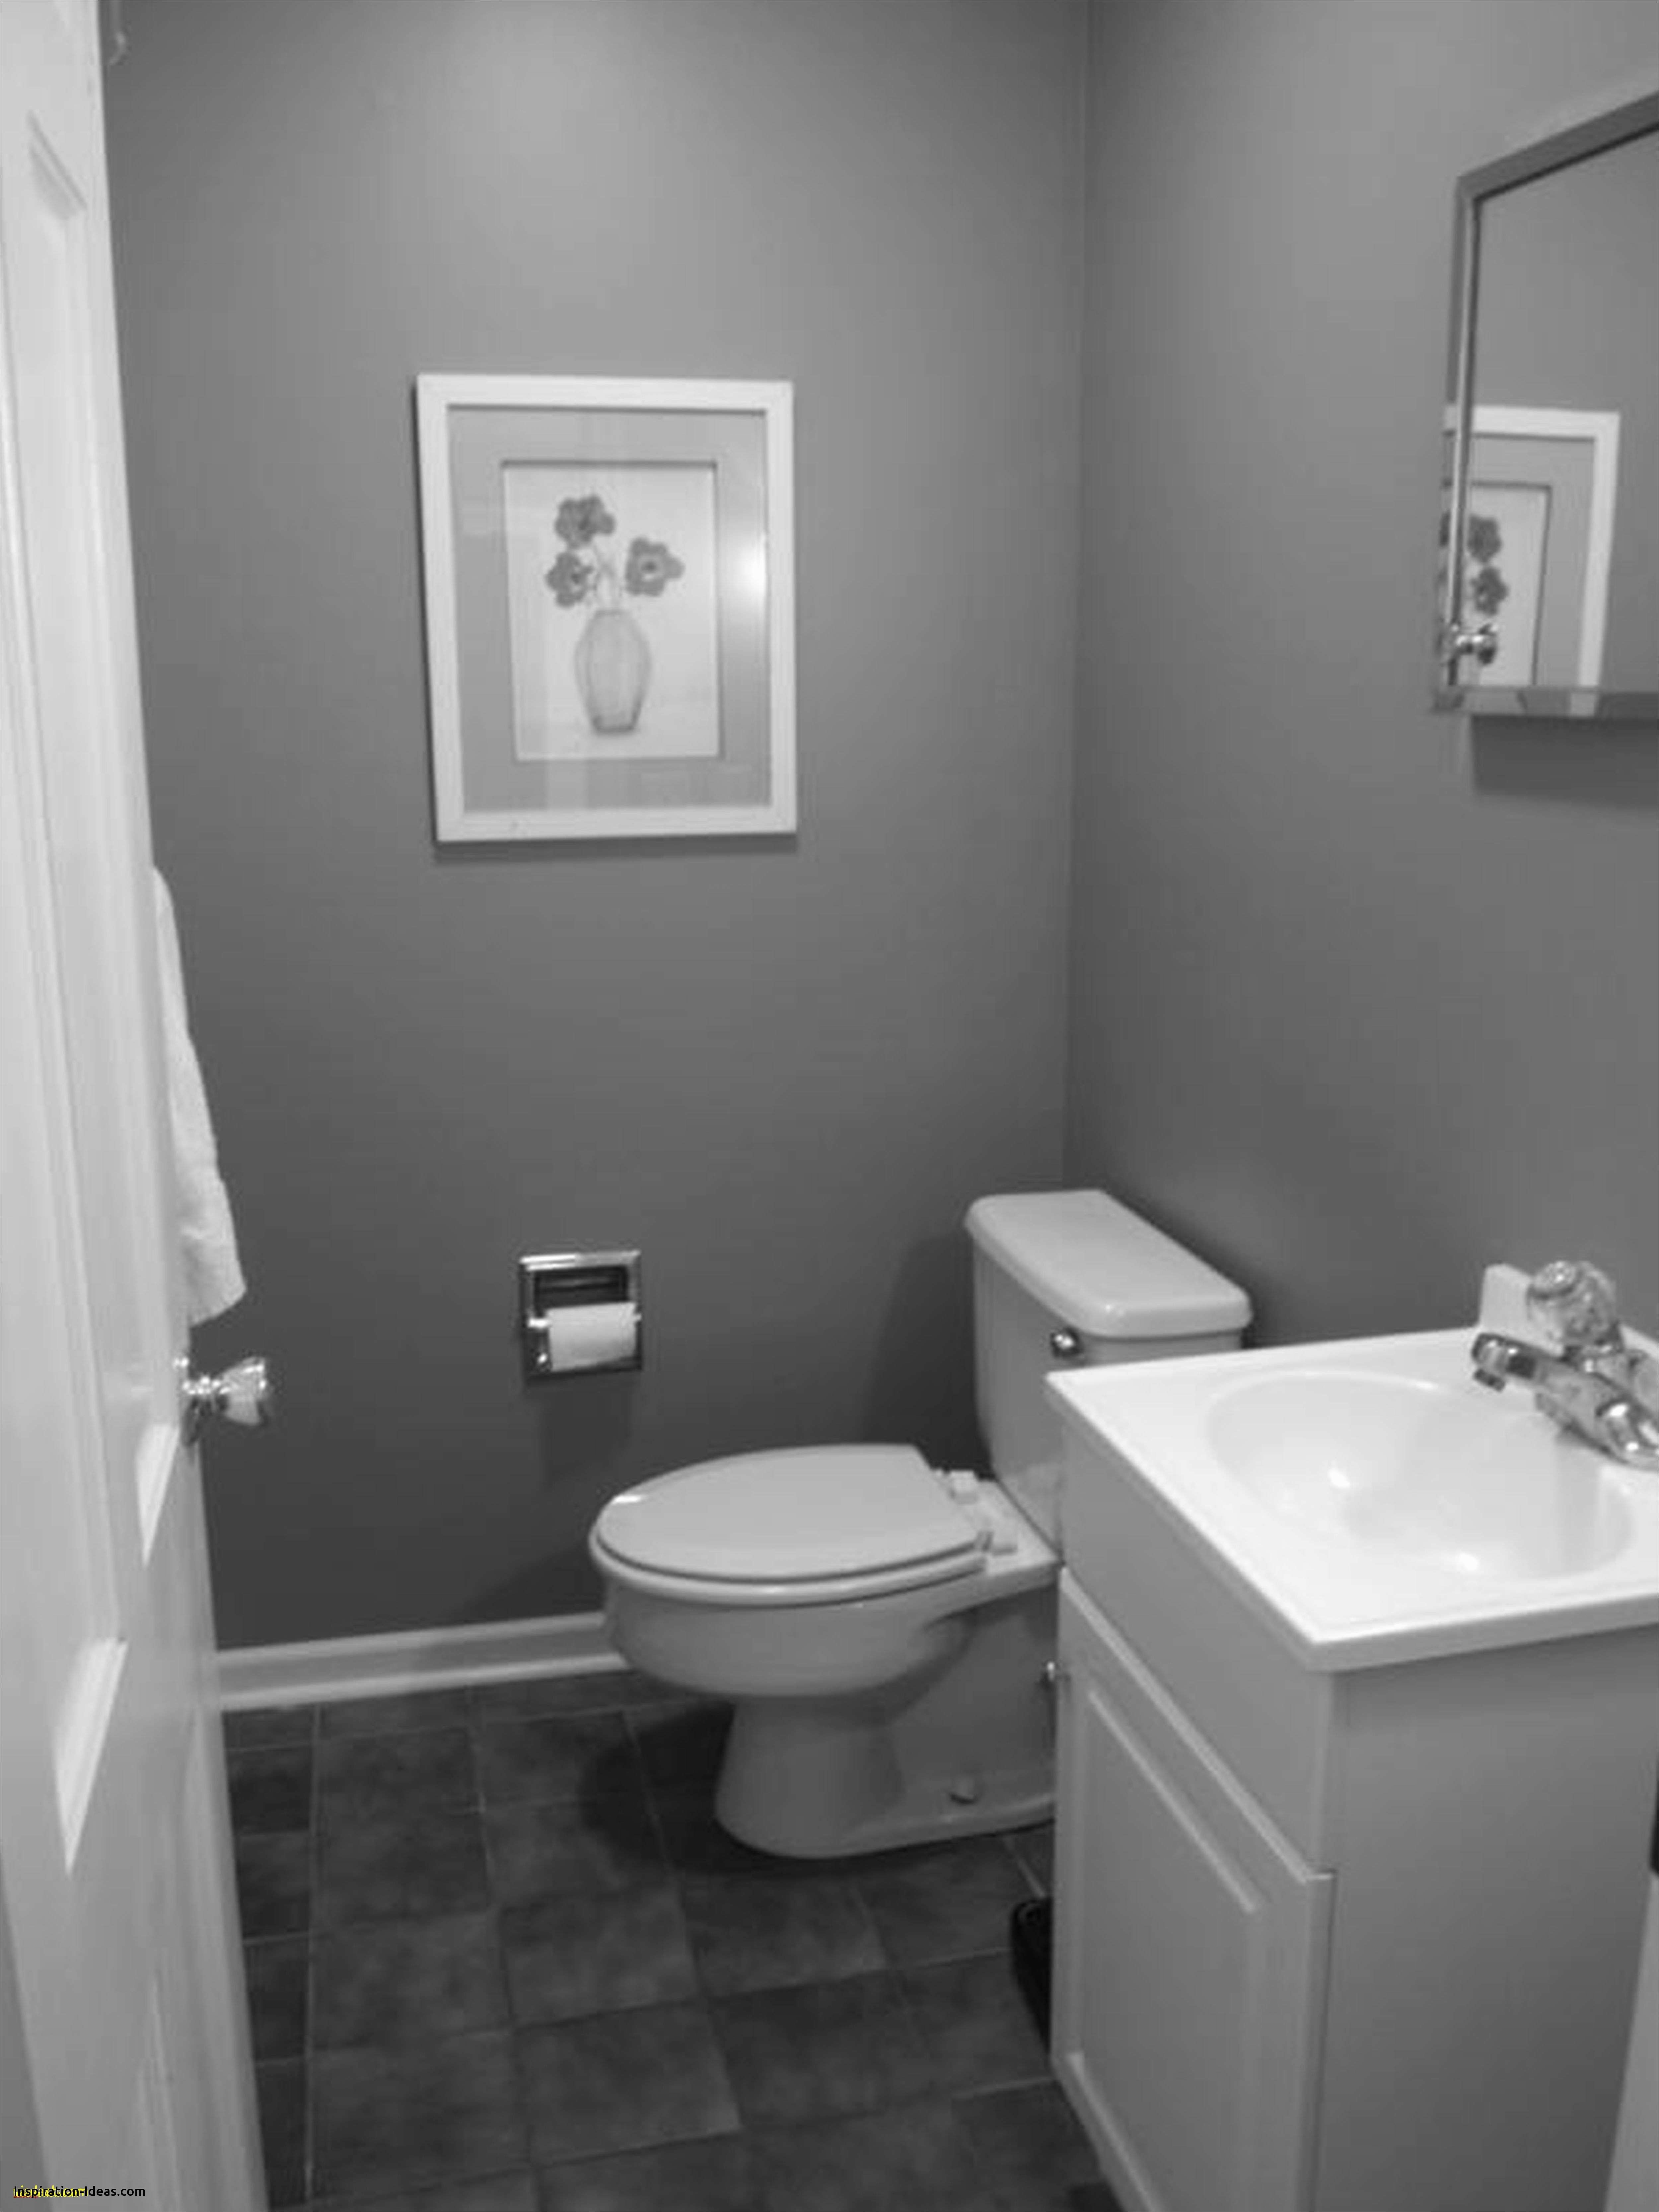 Bathroom Design Gray and White Fresh White Bathroom Designs Fresh Grey Bathroom 0d Archives Modern House